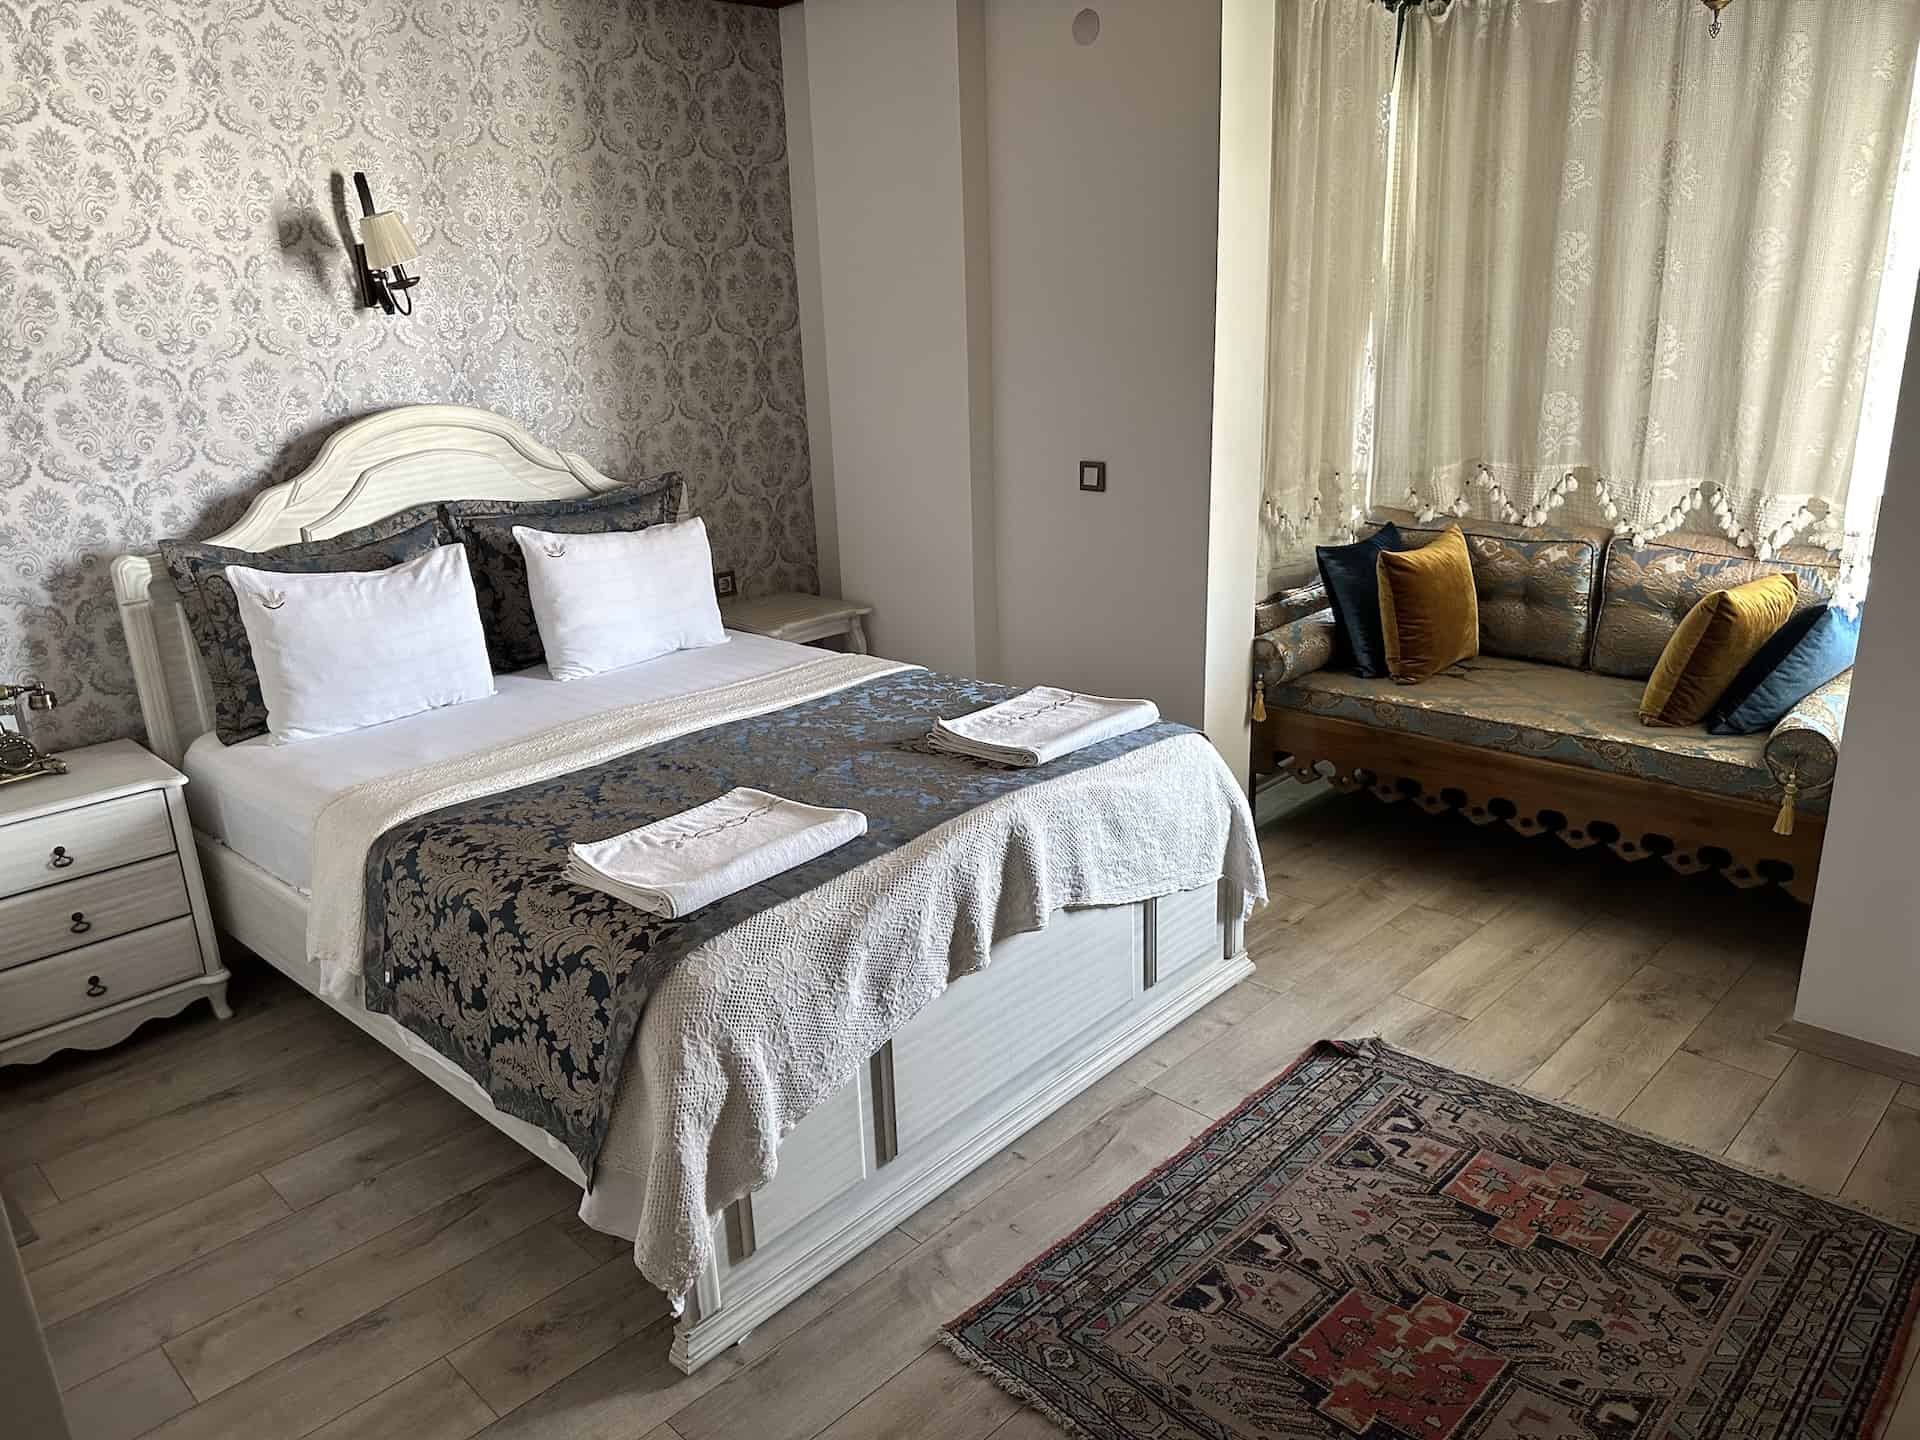 Room at Celsus Hotel in Selçuk, Turkey